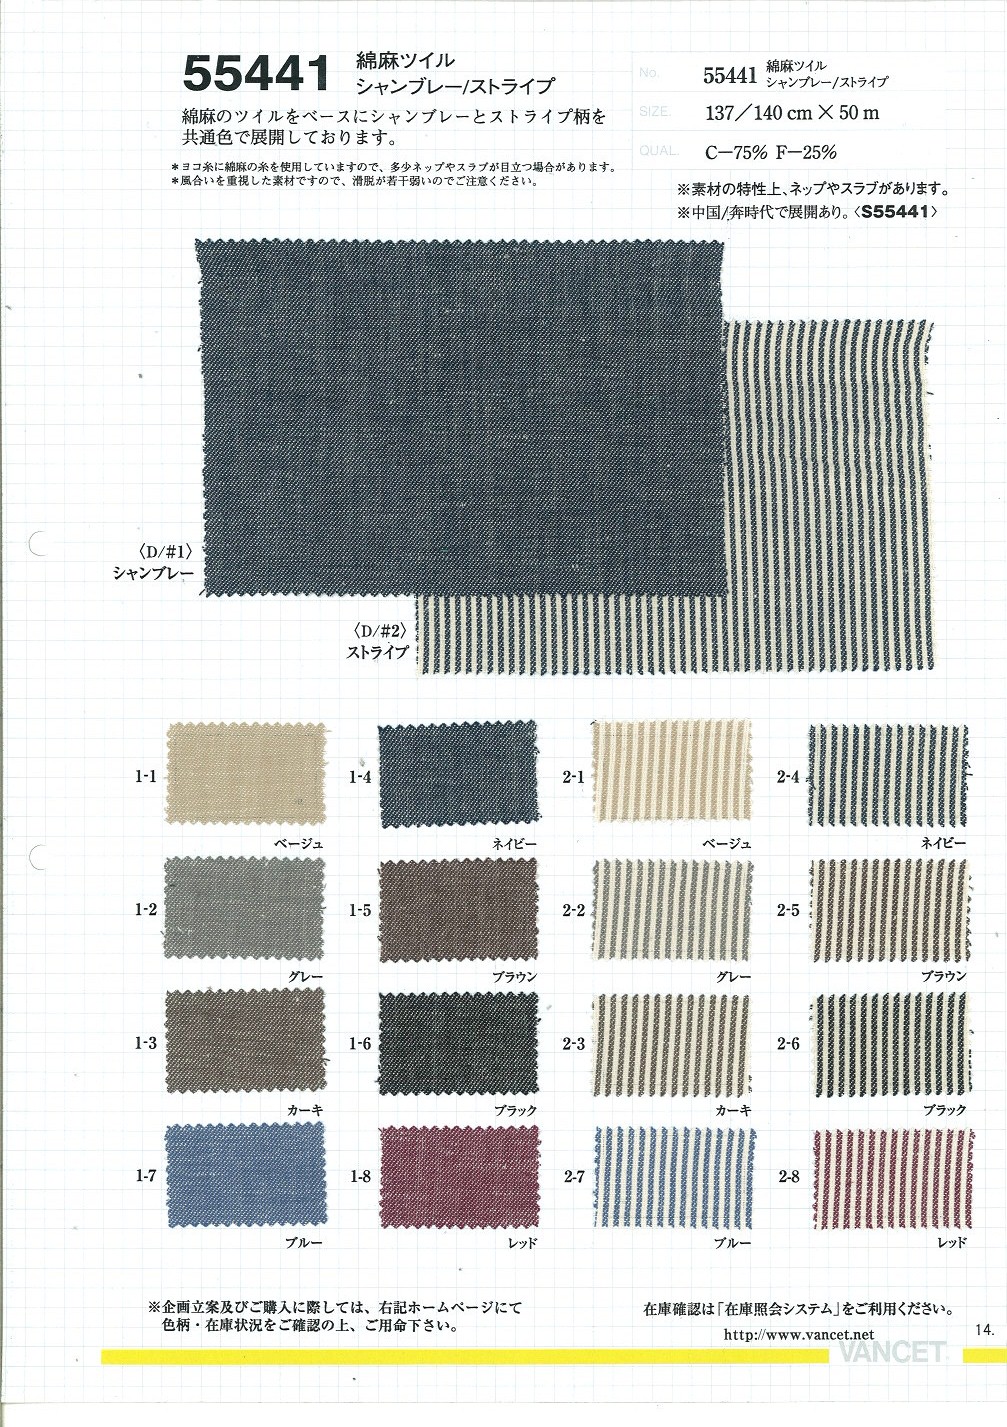 55441 Linen Linen Twill Chambray/stripe[Textile / Fabric] VANCET